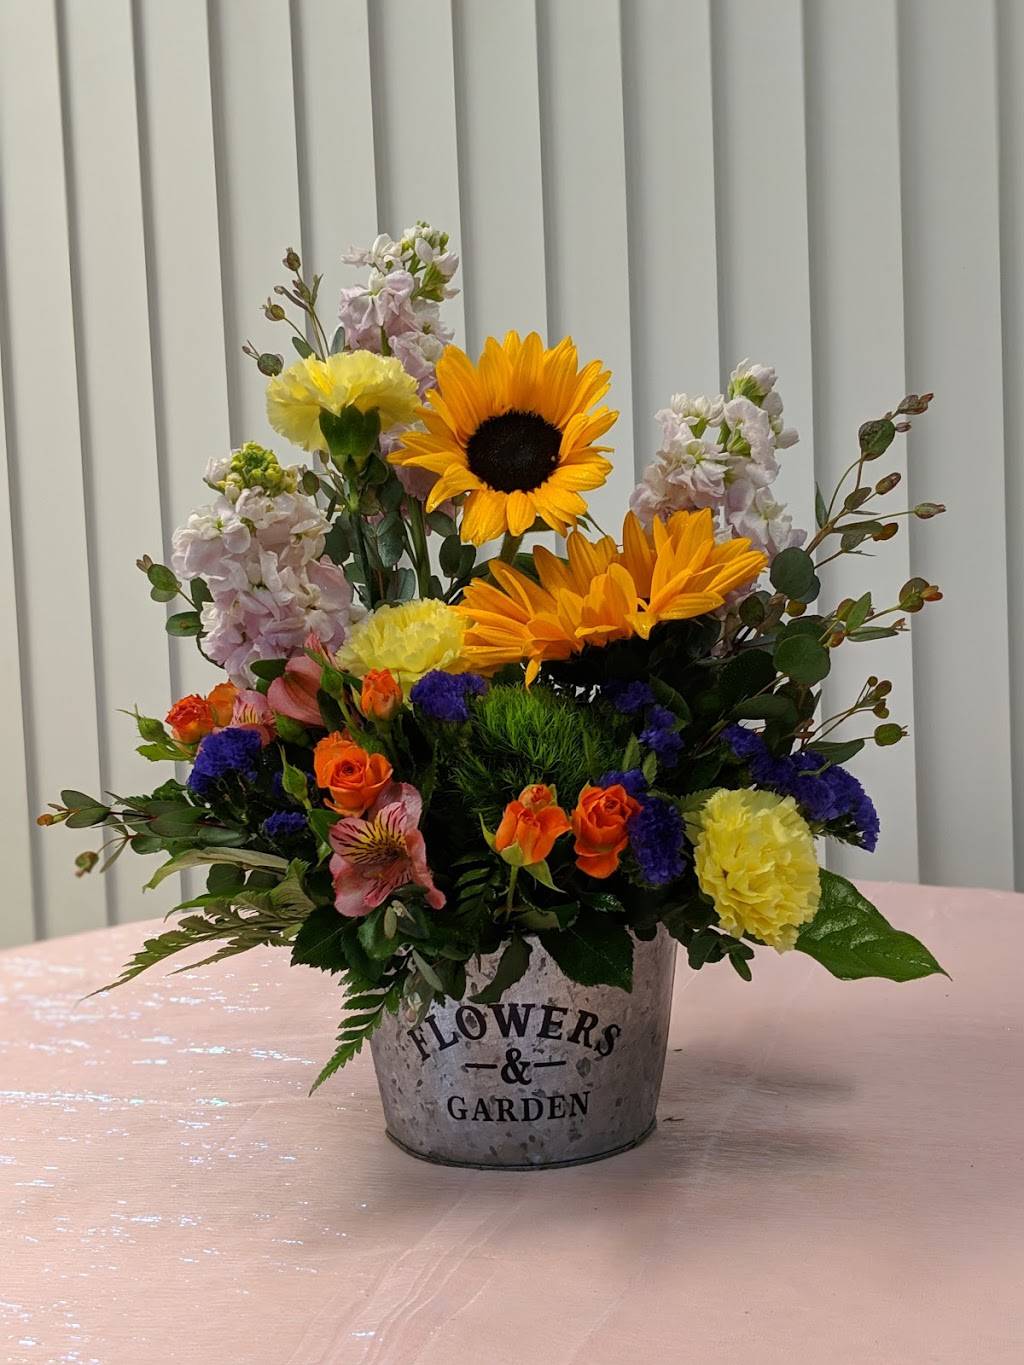 Graceful Lily Floral Design | 2619 S Waterman Ave E, San Bernardino, CA 92408, USA | Phone: (909) 533-4964